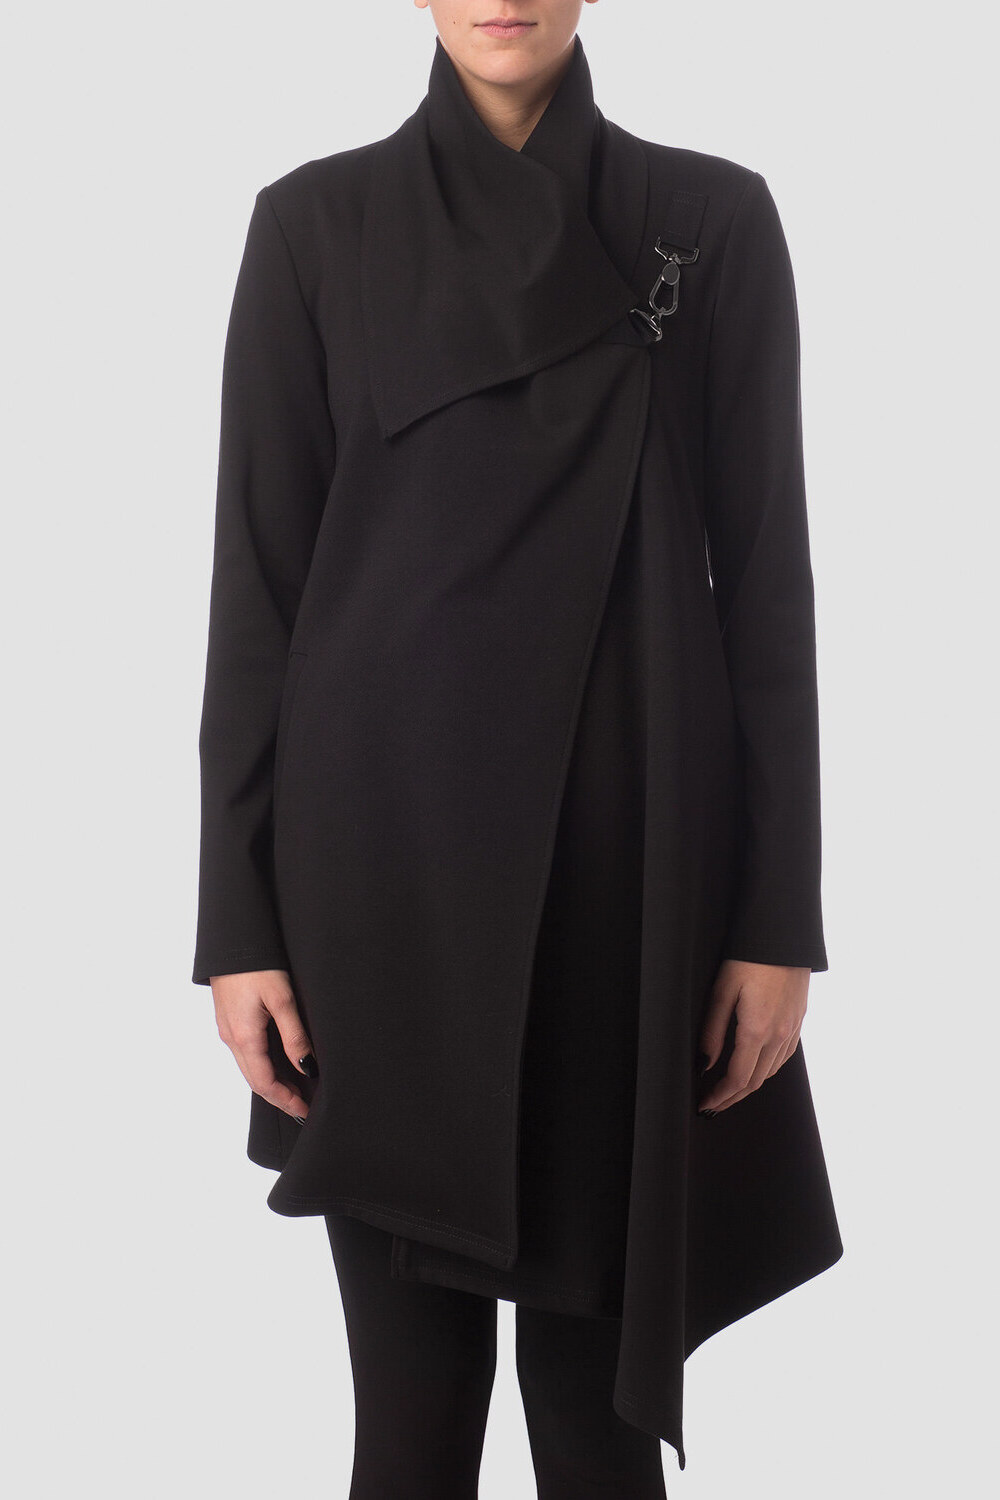 Joseph Ribkoff coat style 163313. Black